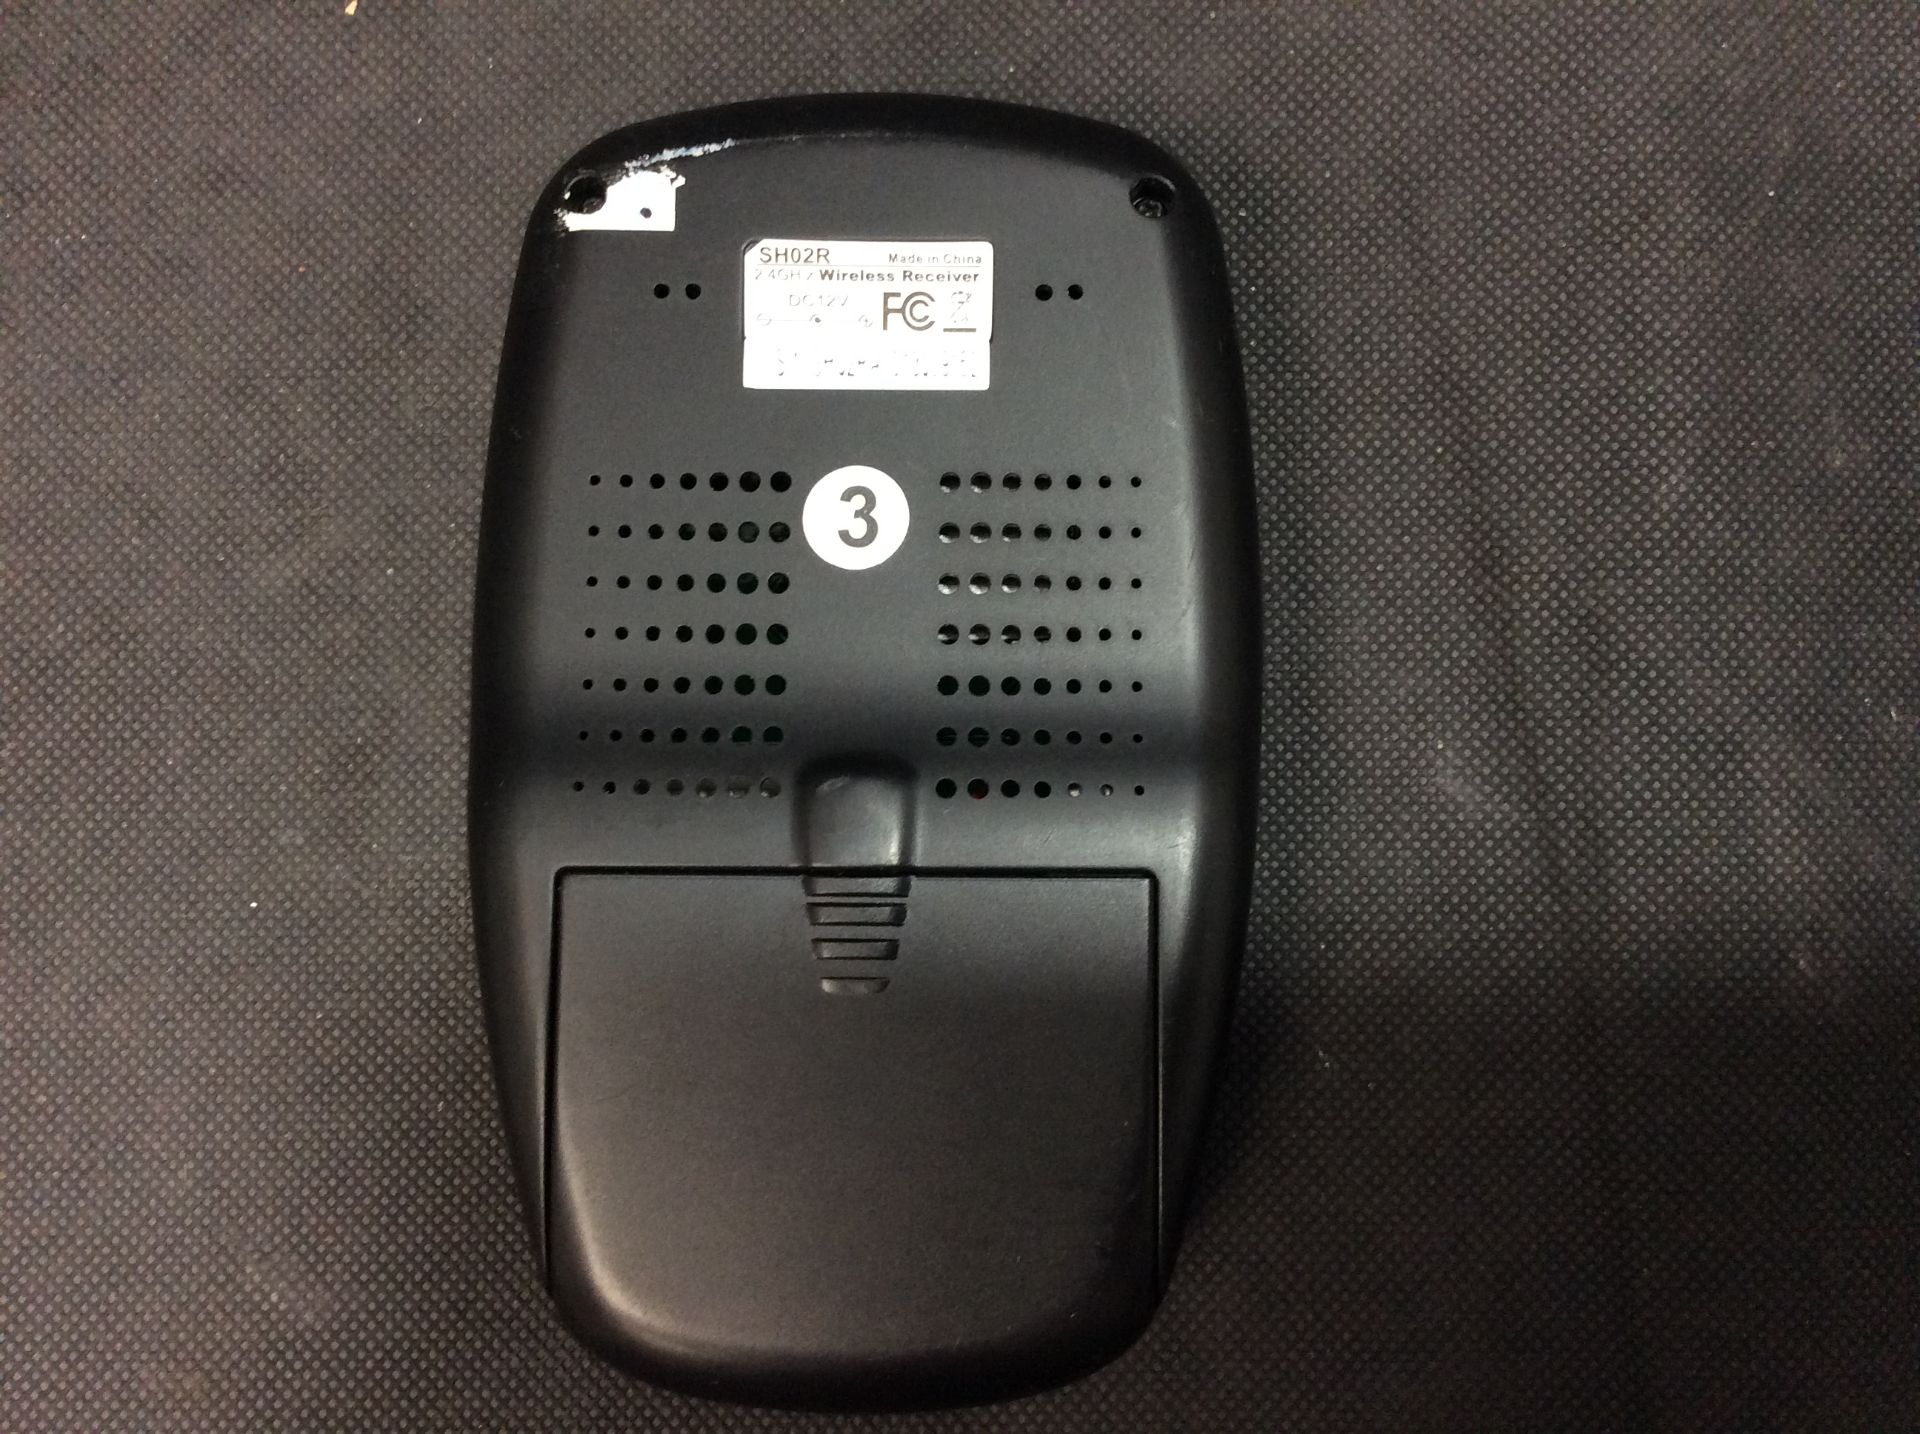 Swifthitch Wireless Receiver Sh02R - Image 2 of 2